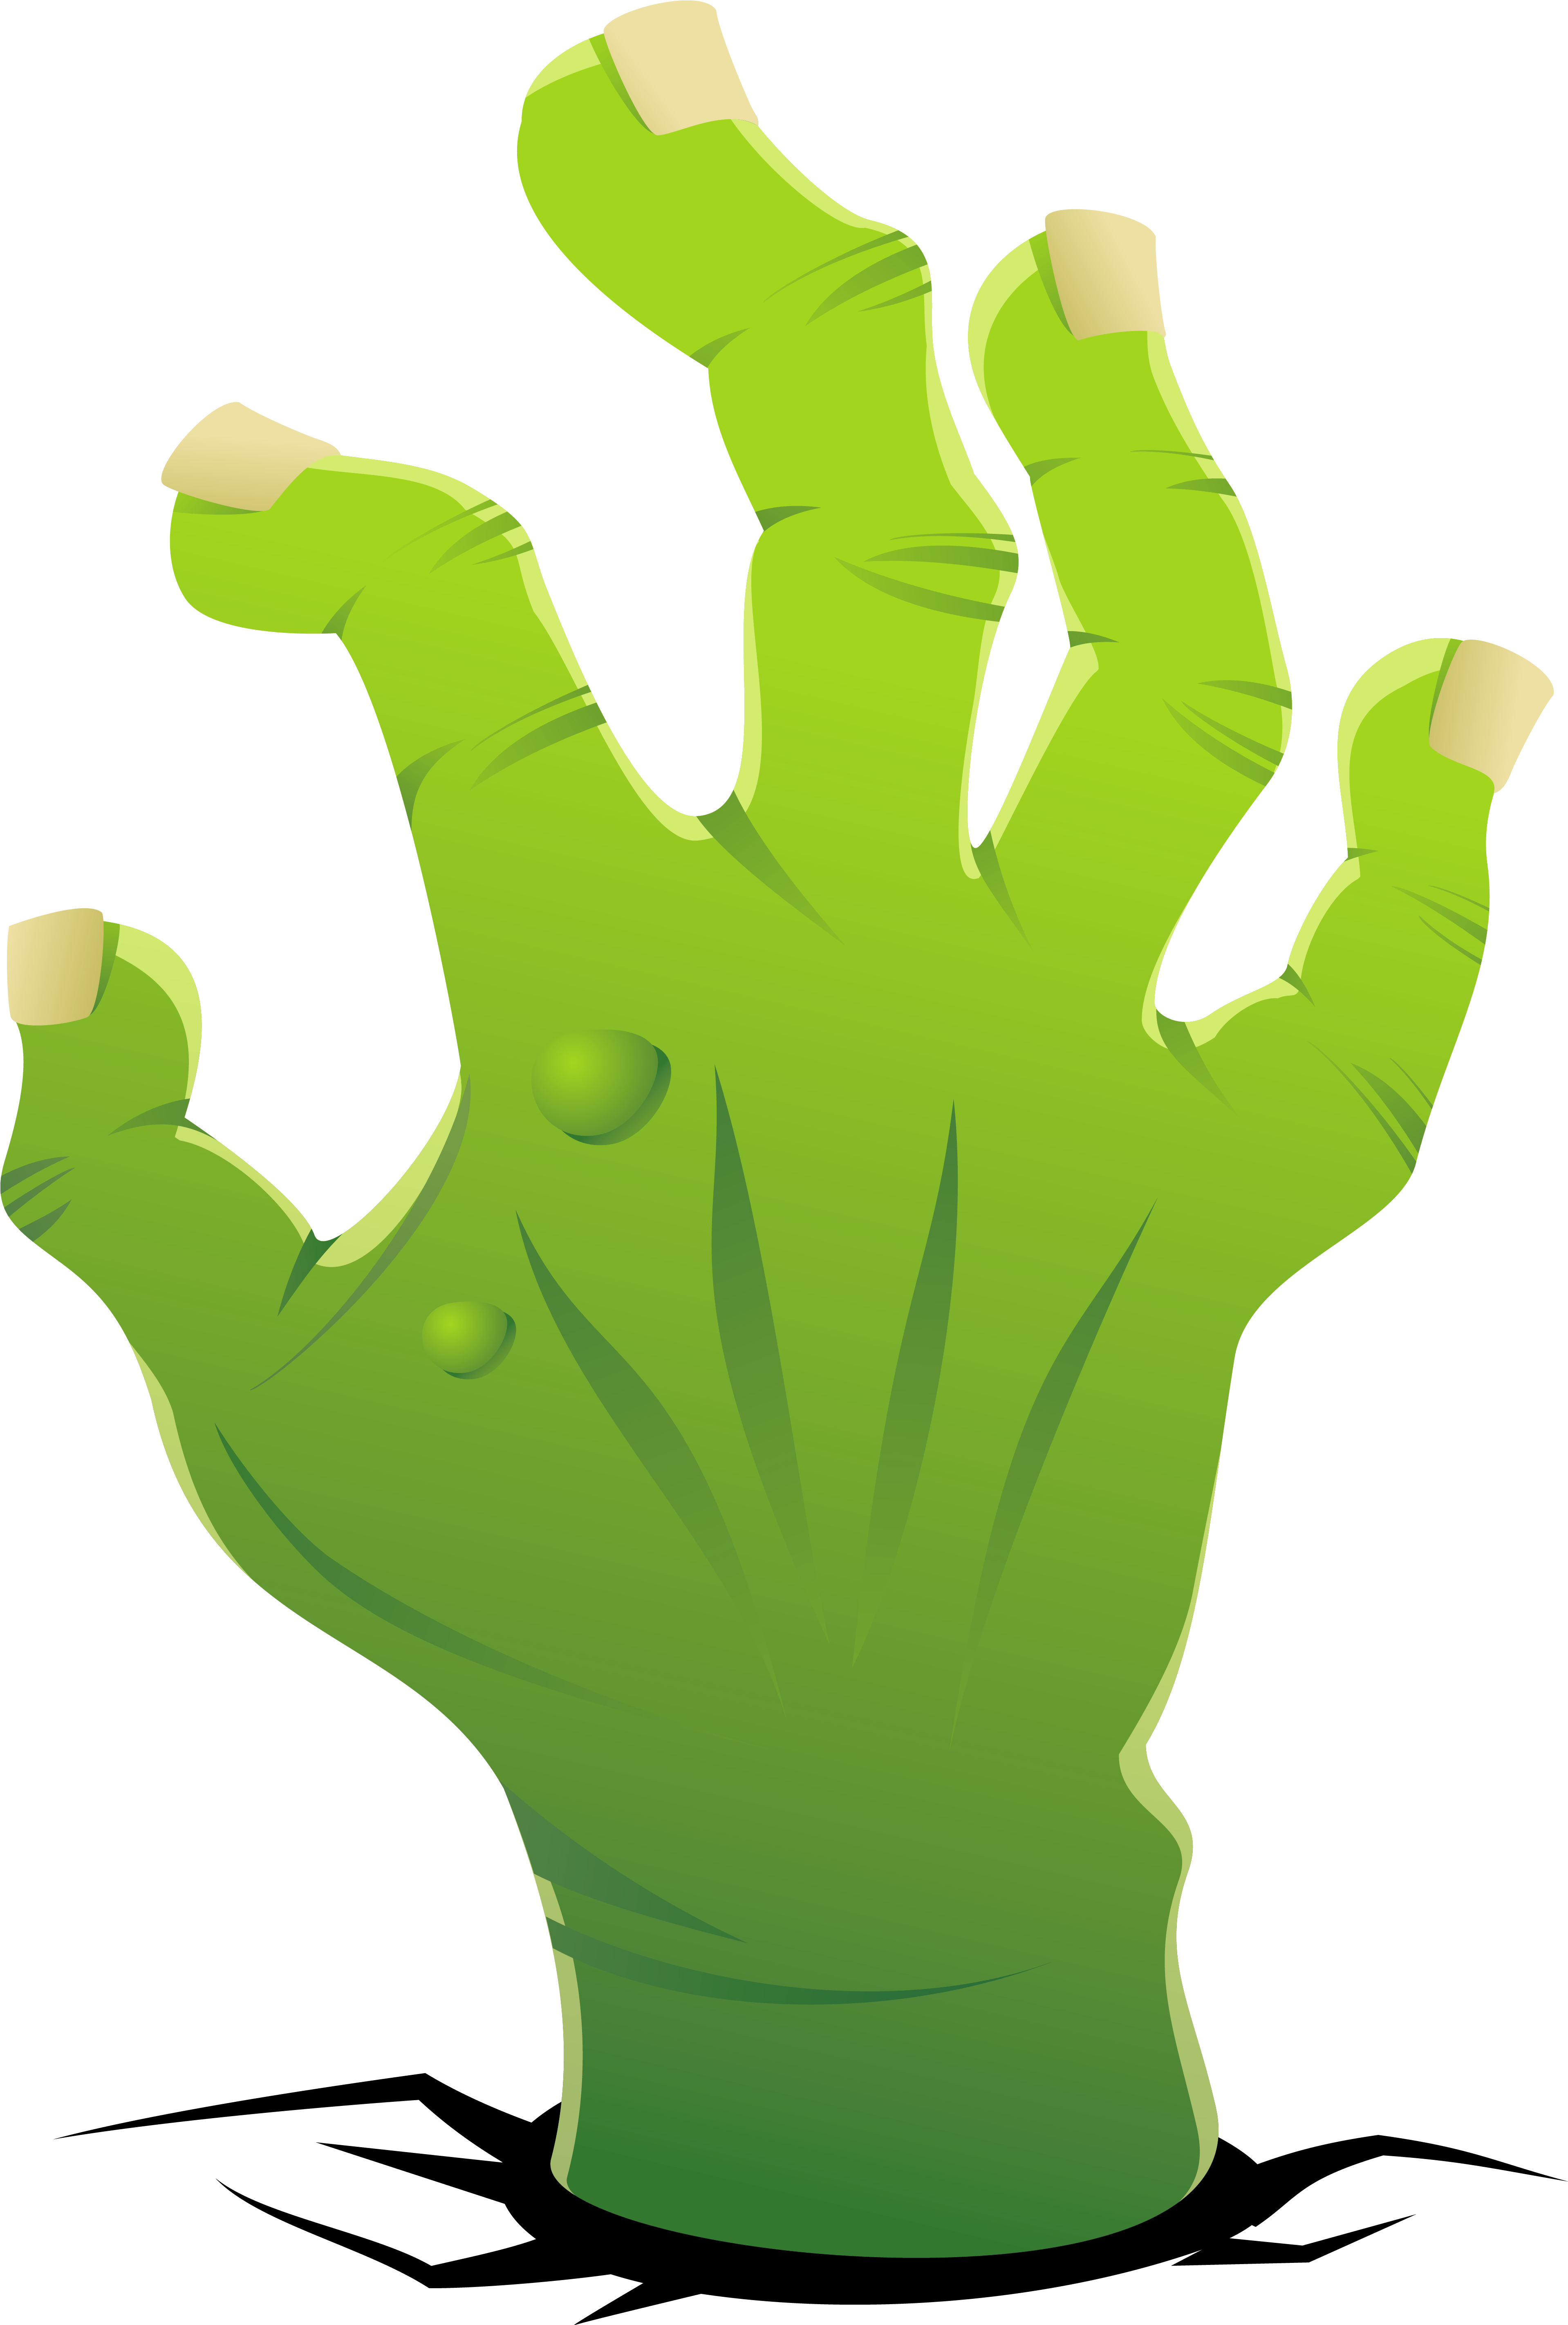 Zombie Hand Clipart Image - Zombie Hand Clipart Transparent (3979x5899)